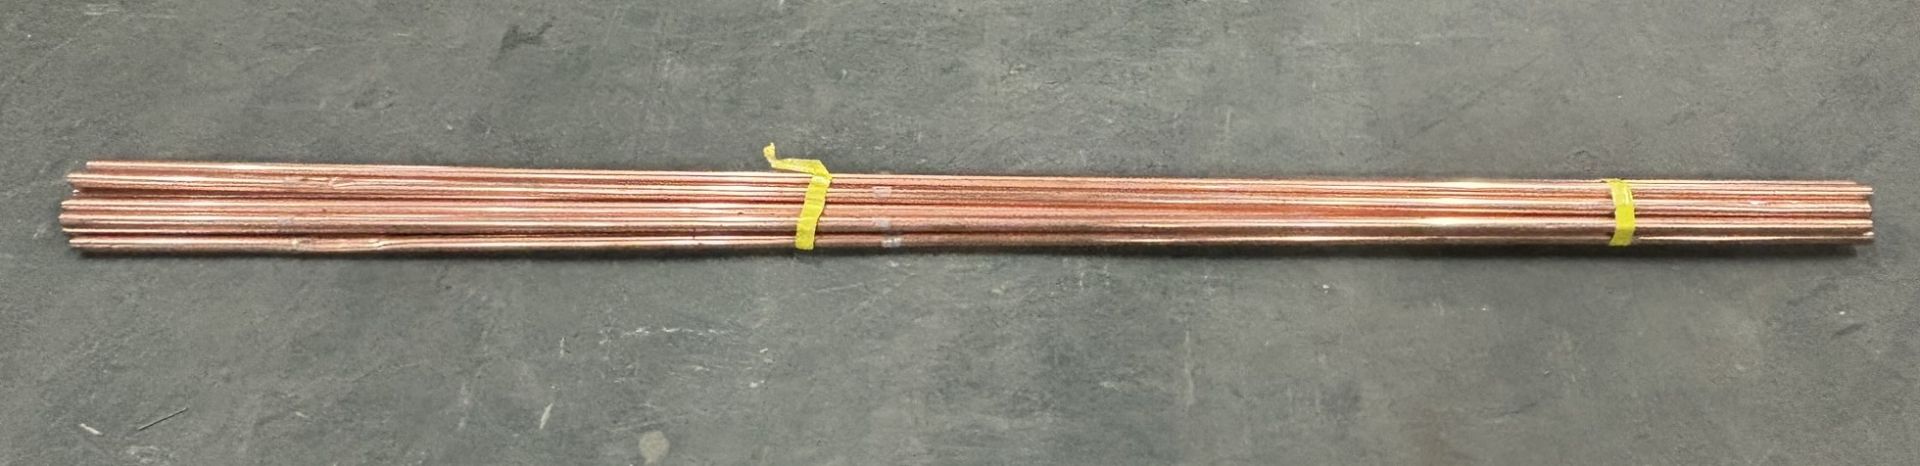 10 x 3Mtr x 26mm Copper Pipes